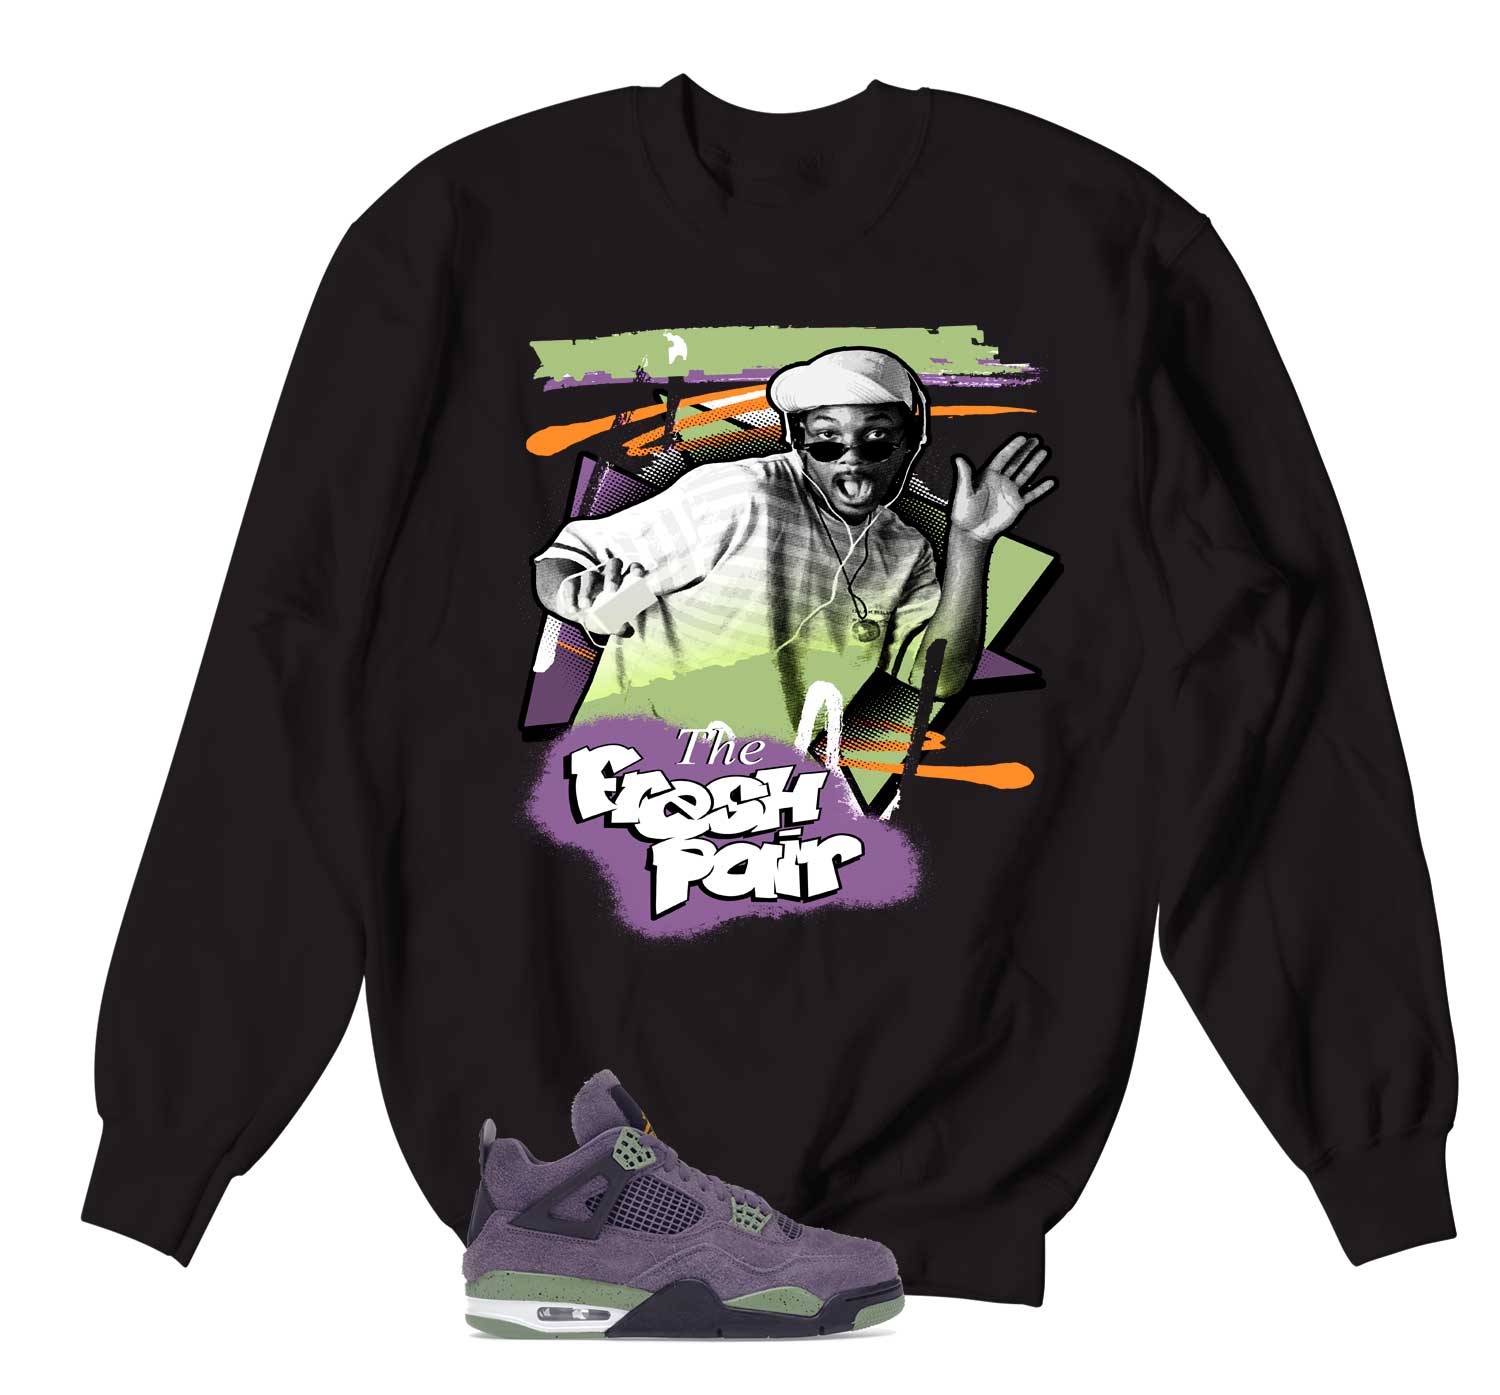 Retro 4 Canyon Purple Sweater - Fresh Pair - Black